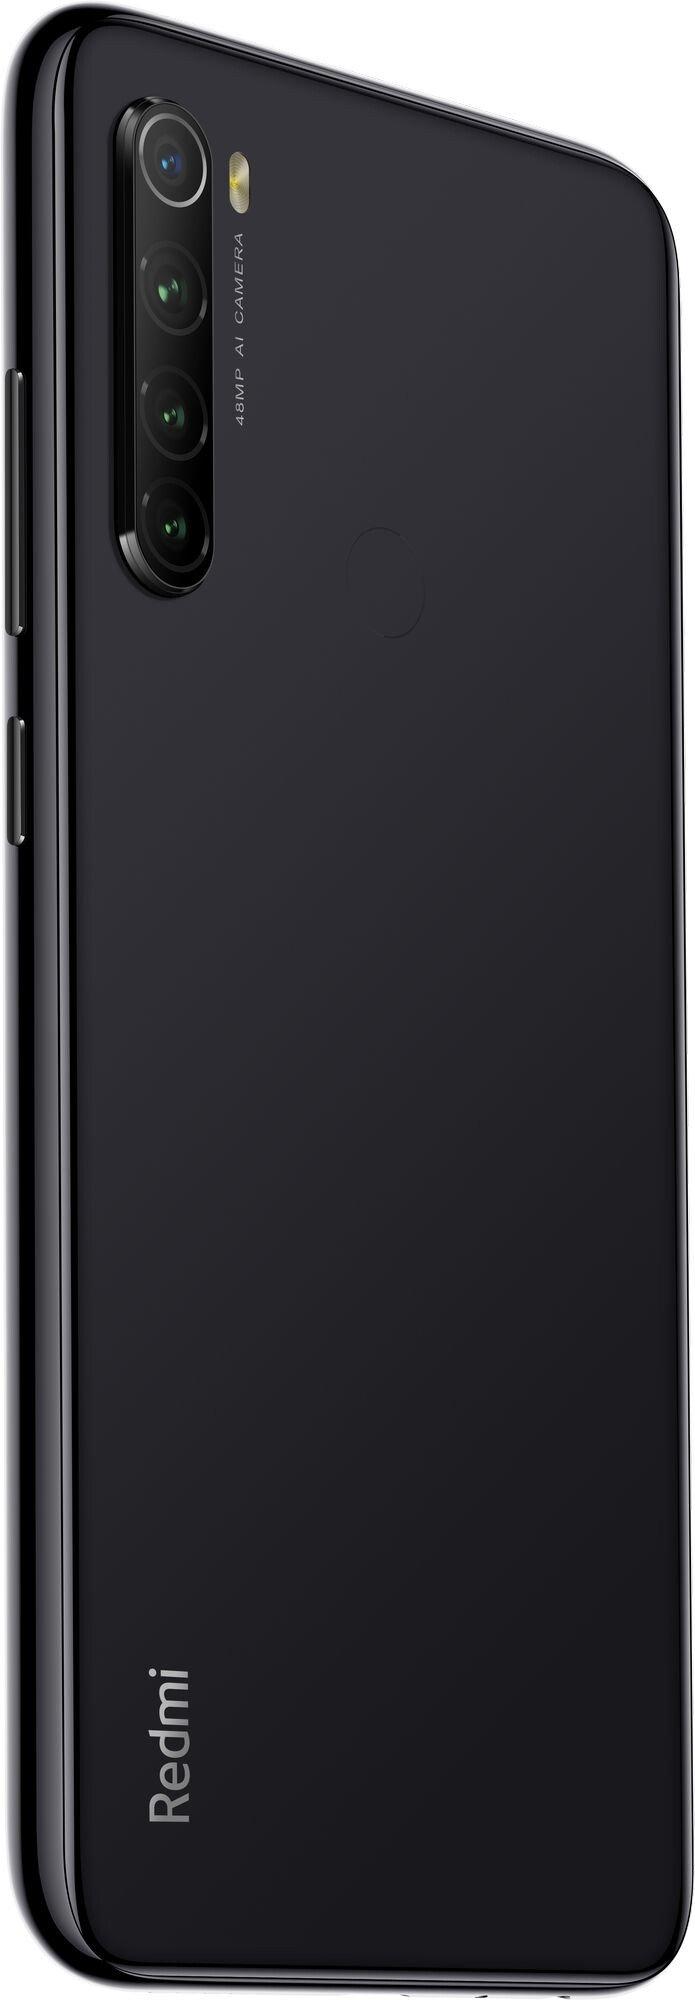 Смартфон Xiaomi Redmi Note 8 4/128Gb Space Black заказать